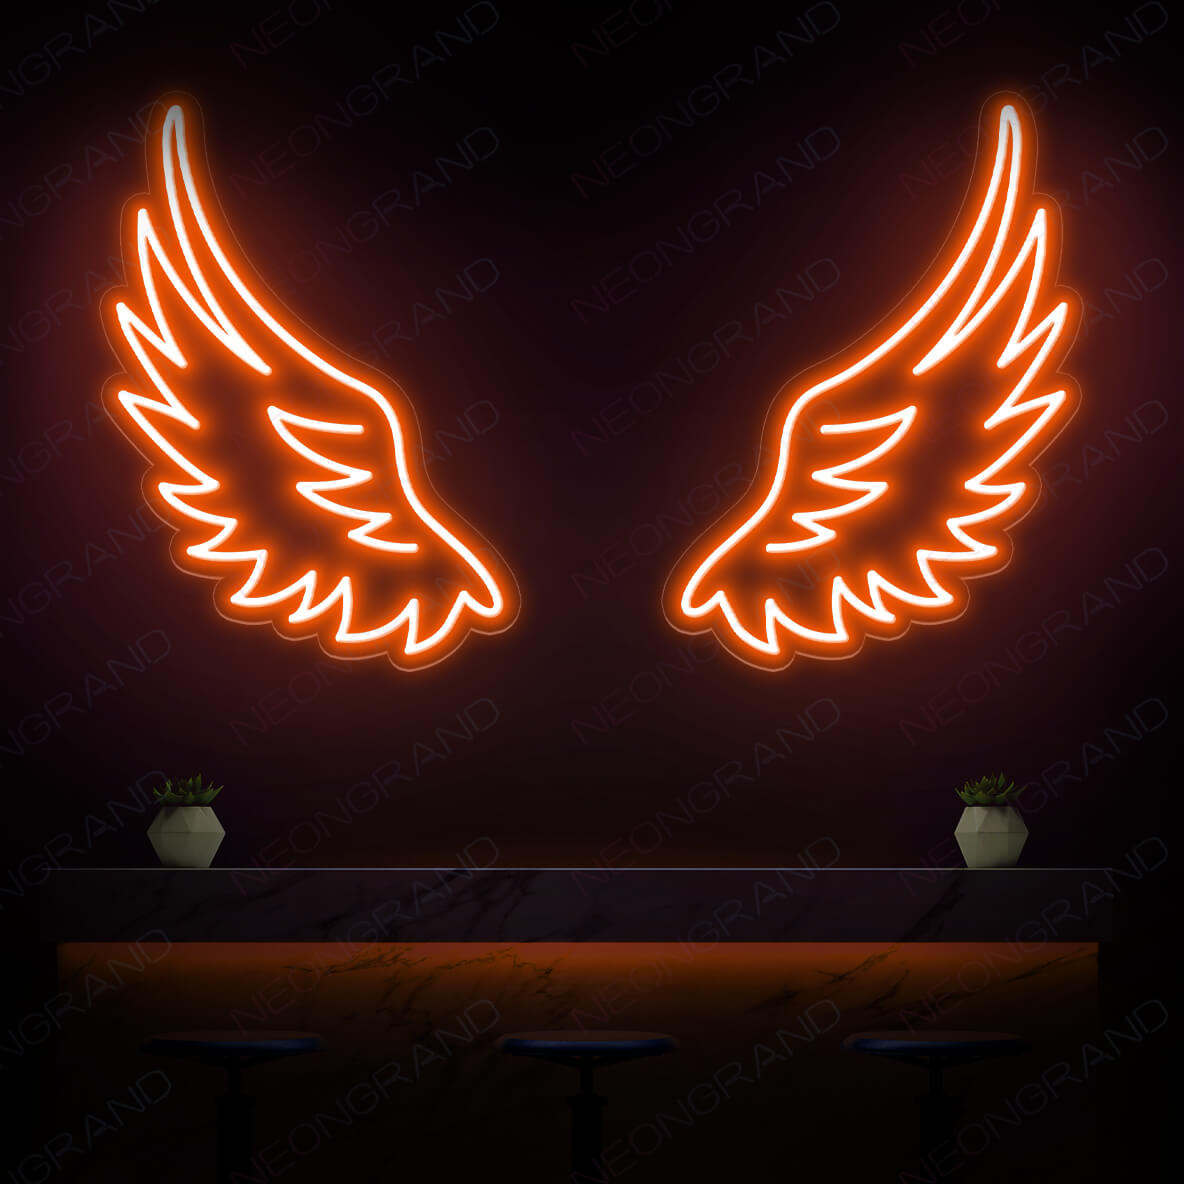 Angel Wings Neon Sign Led Light Bar Neon Signs Orange